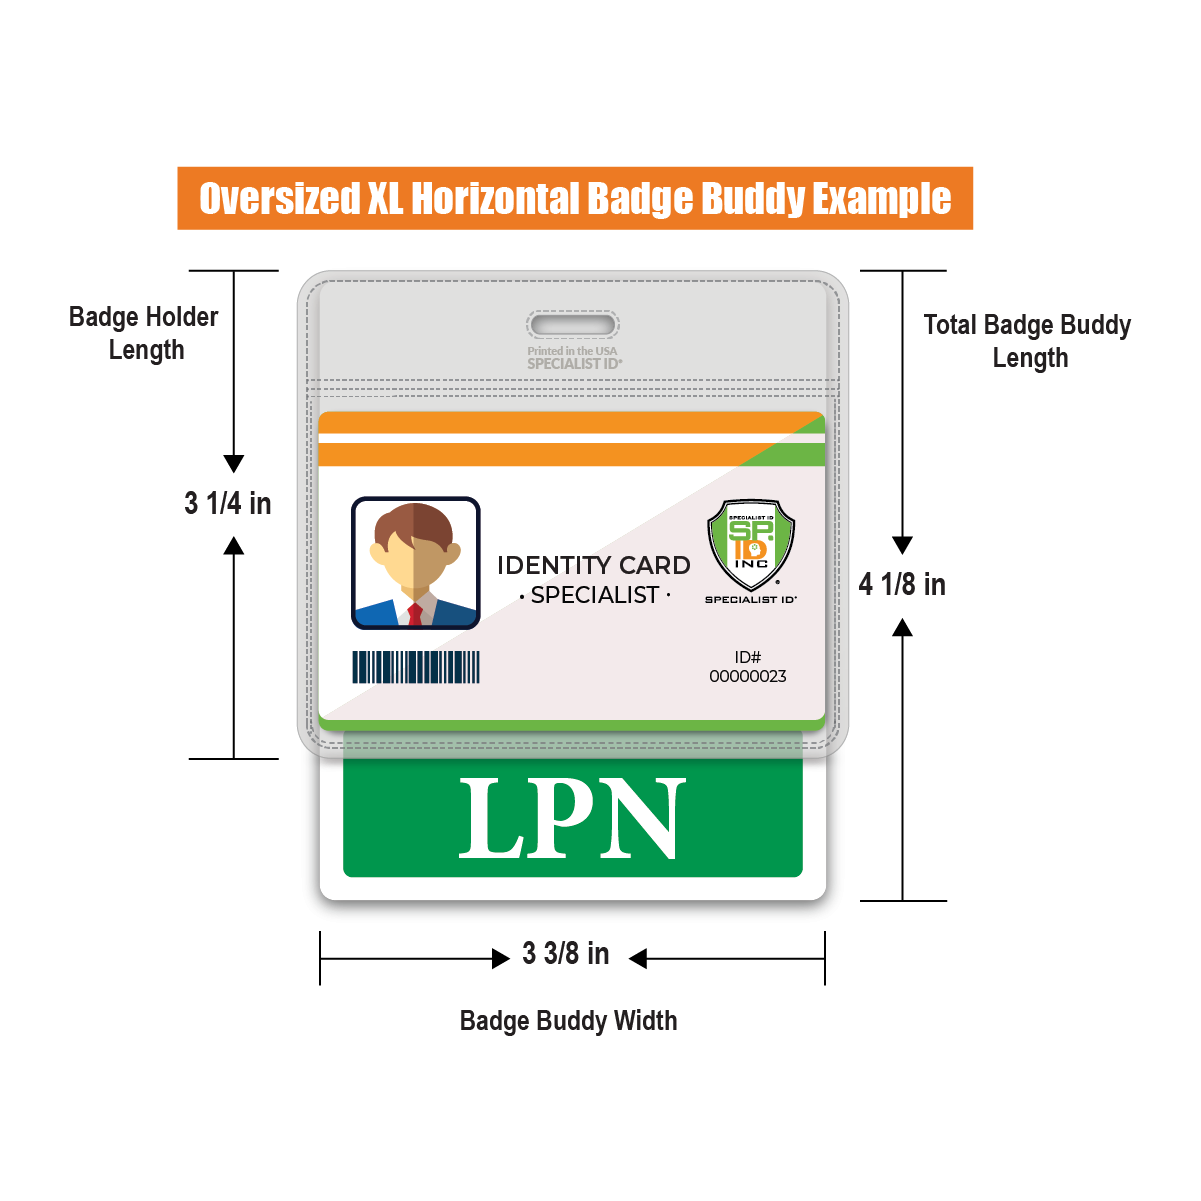 Oversized LPN Badge Buddy - XL Badge Backer for Nurses - Horizontal Hospital ID Badge Buddies